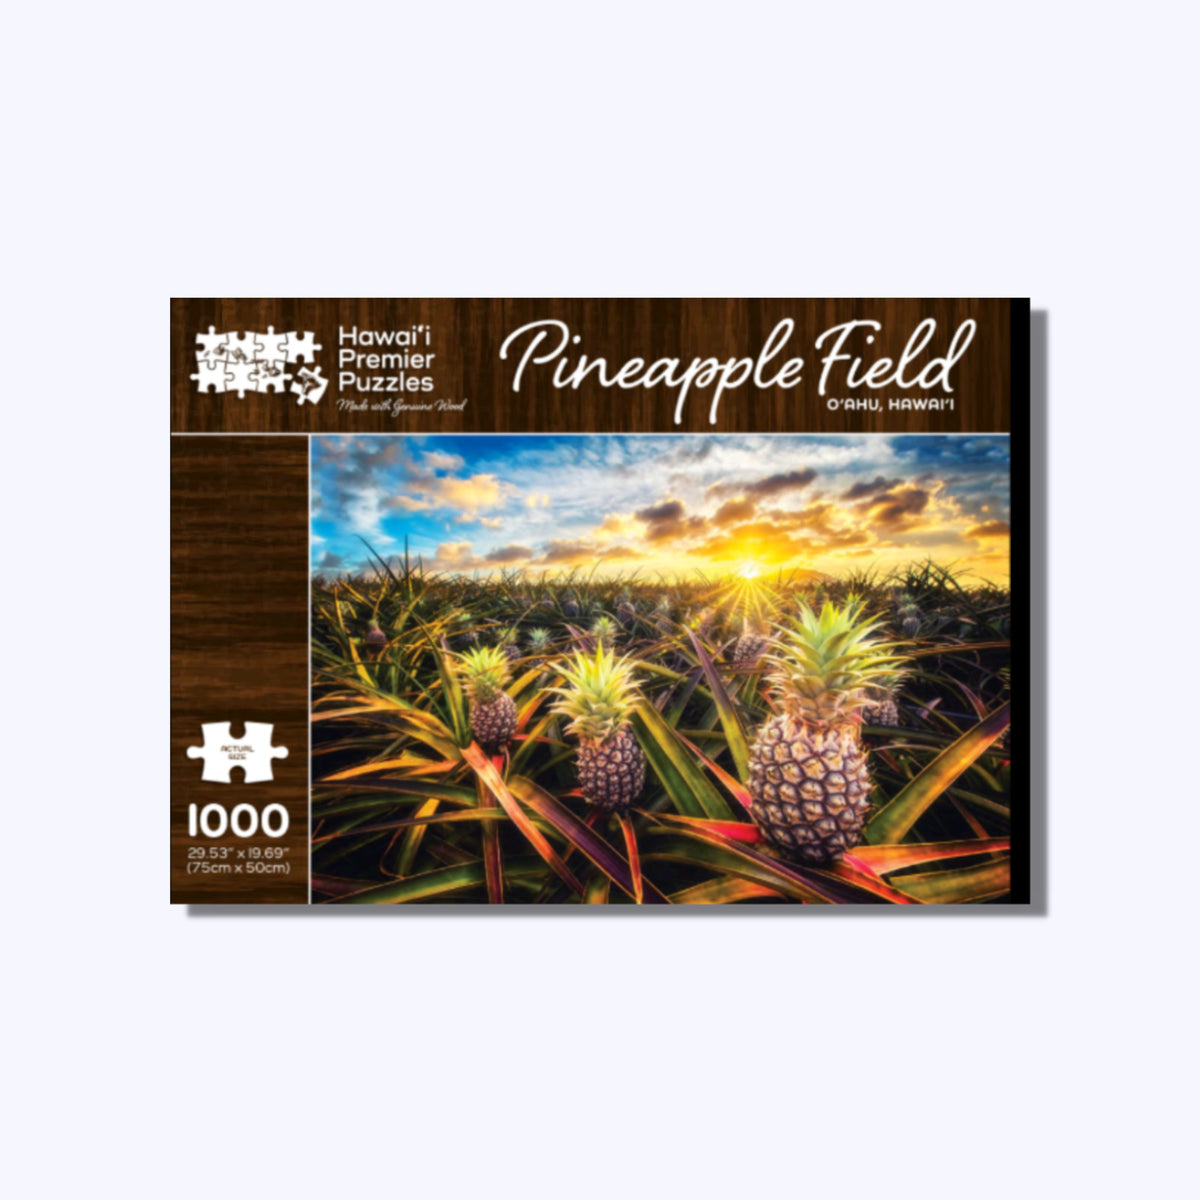 Pop-Up Mākeke - Hawaii Premier Puzzles - Pineapple Field Puzzle - Oahu, Hawaii 1000-Piece Puzzle - Front View